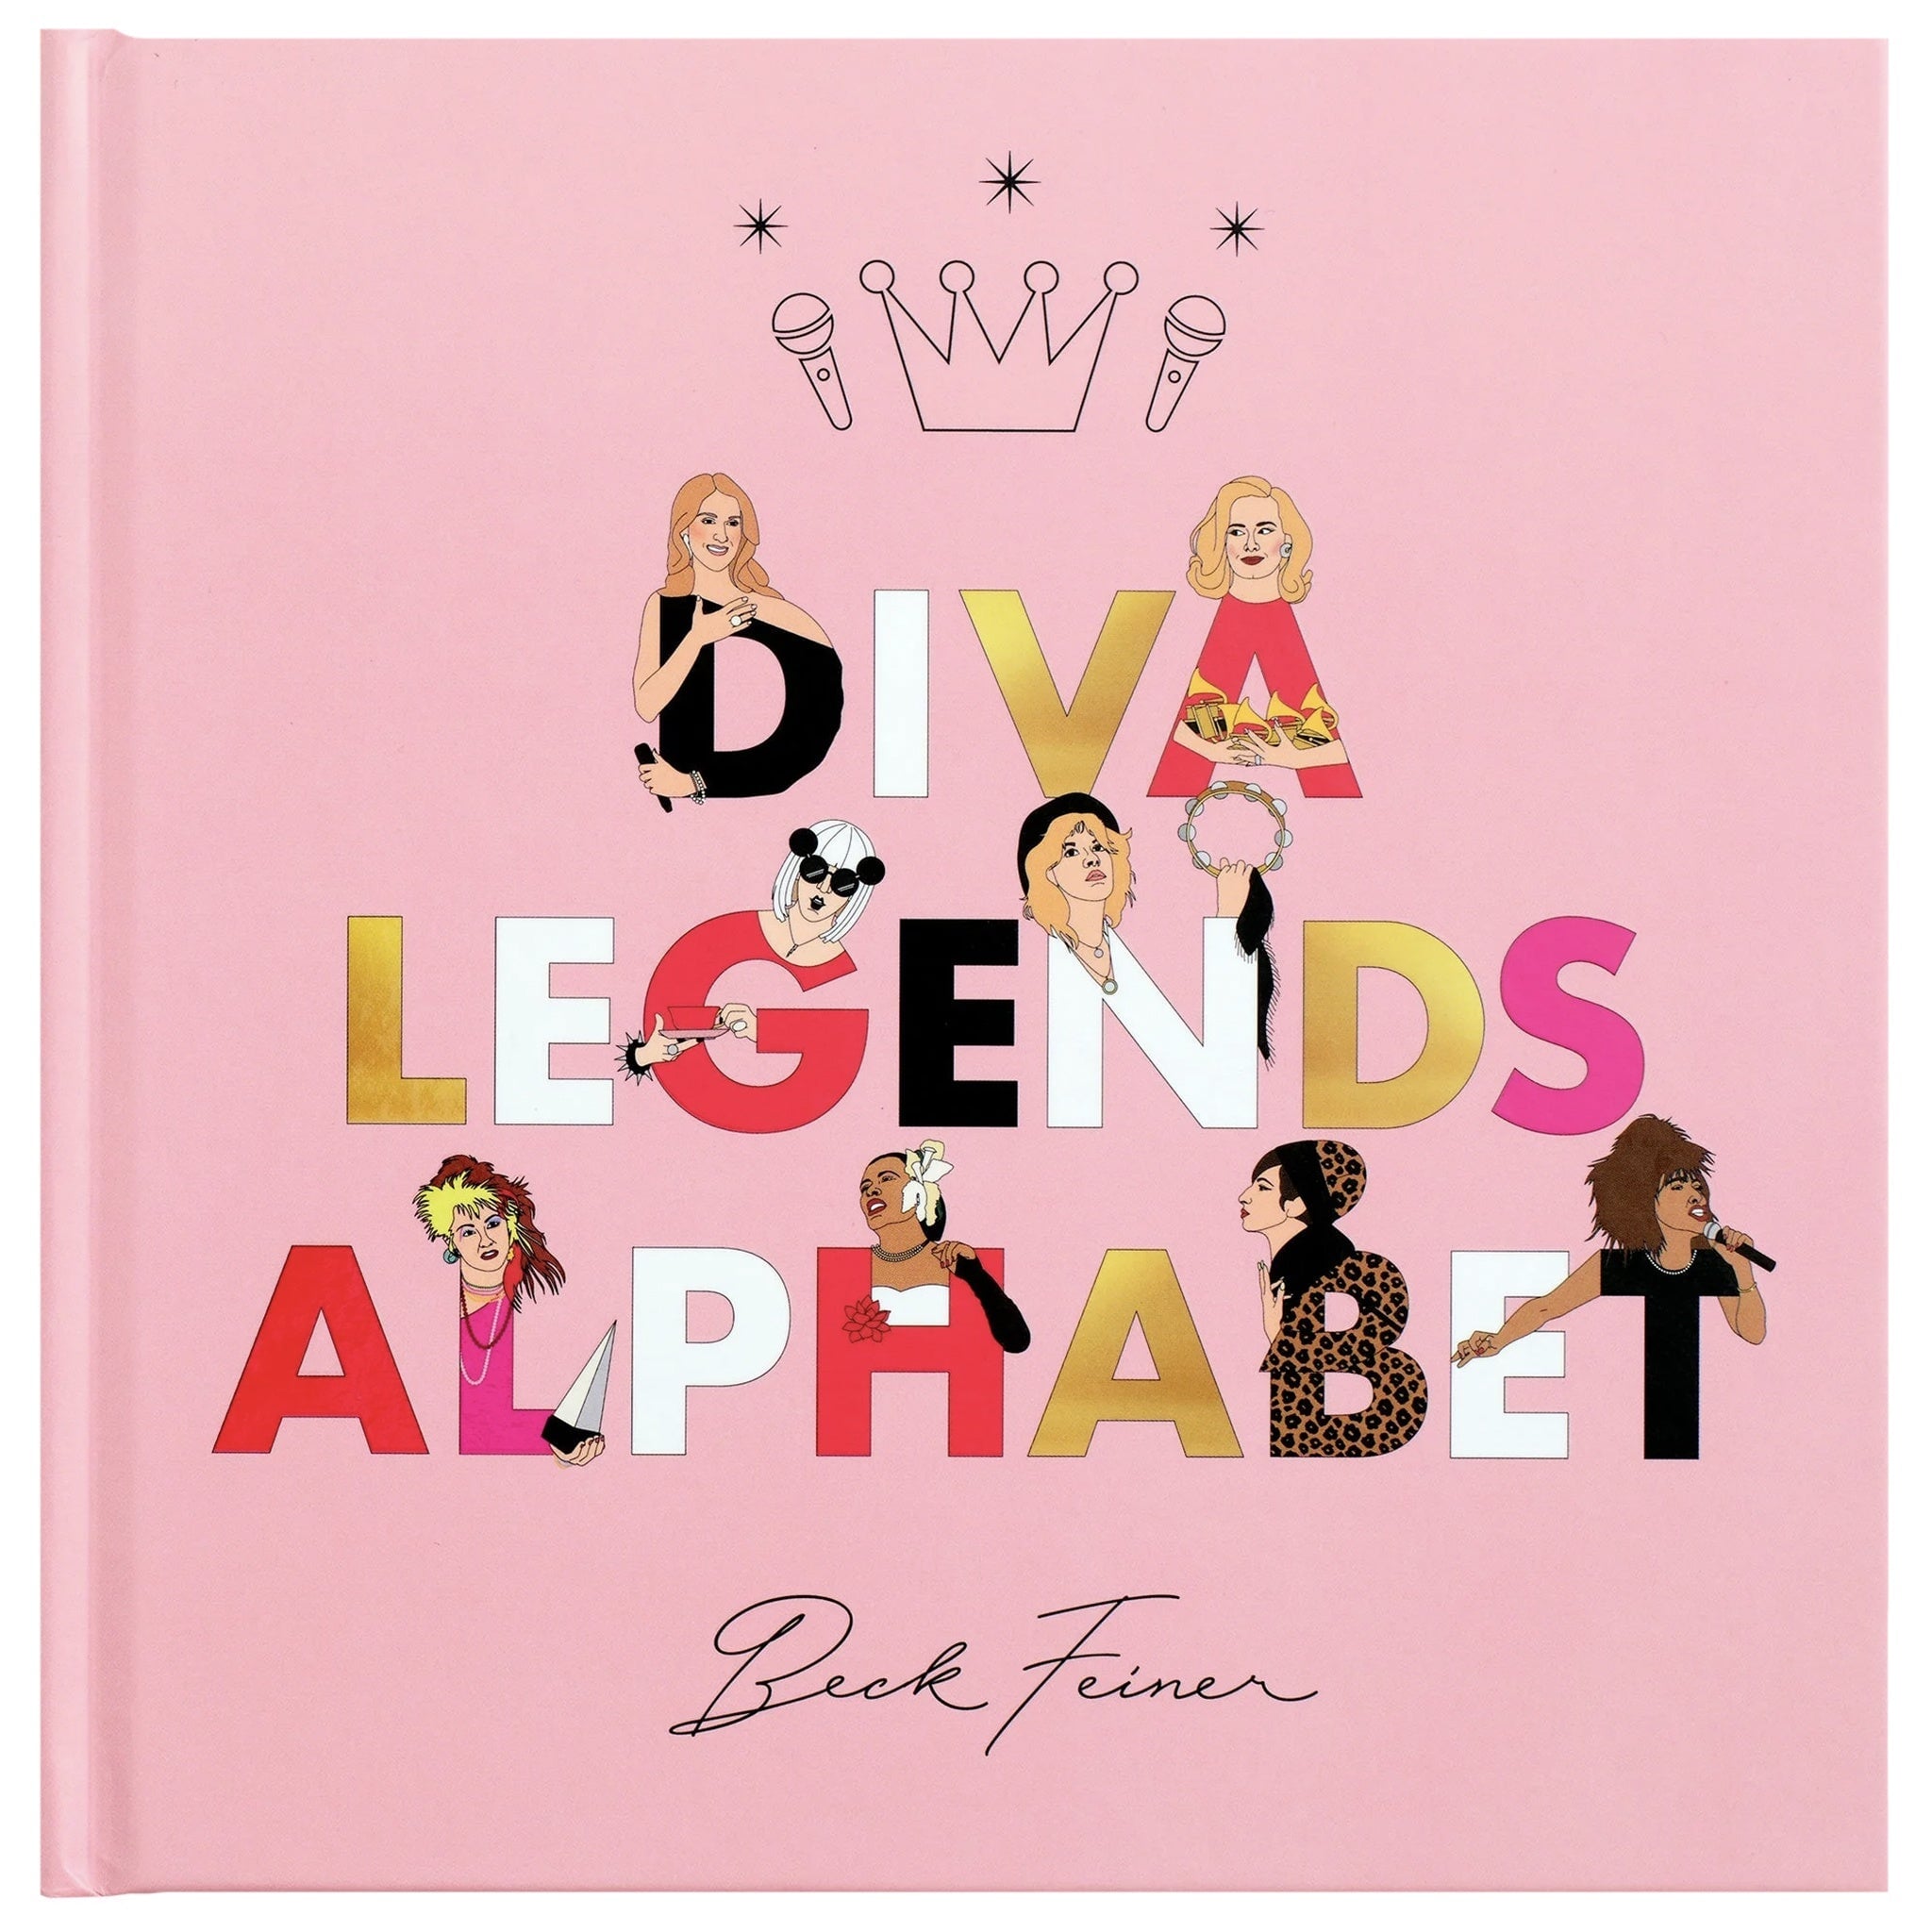 Diva Legends Alphabet - Tea Pea Home